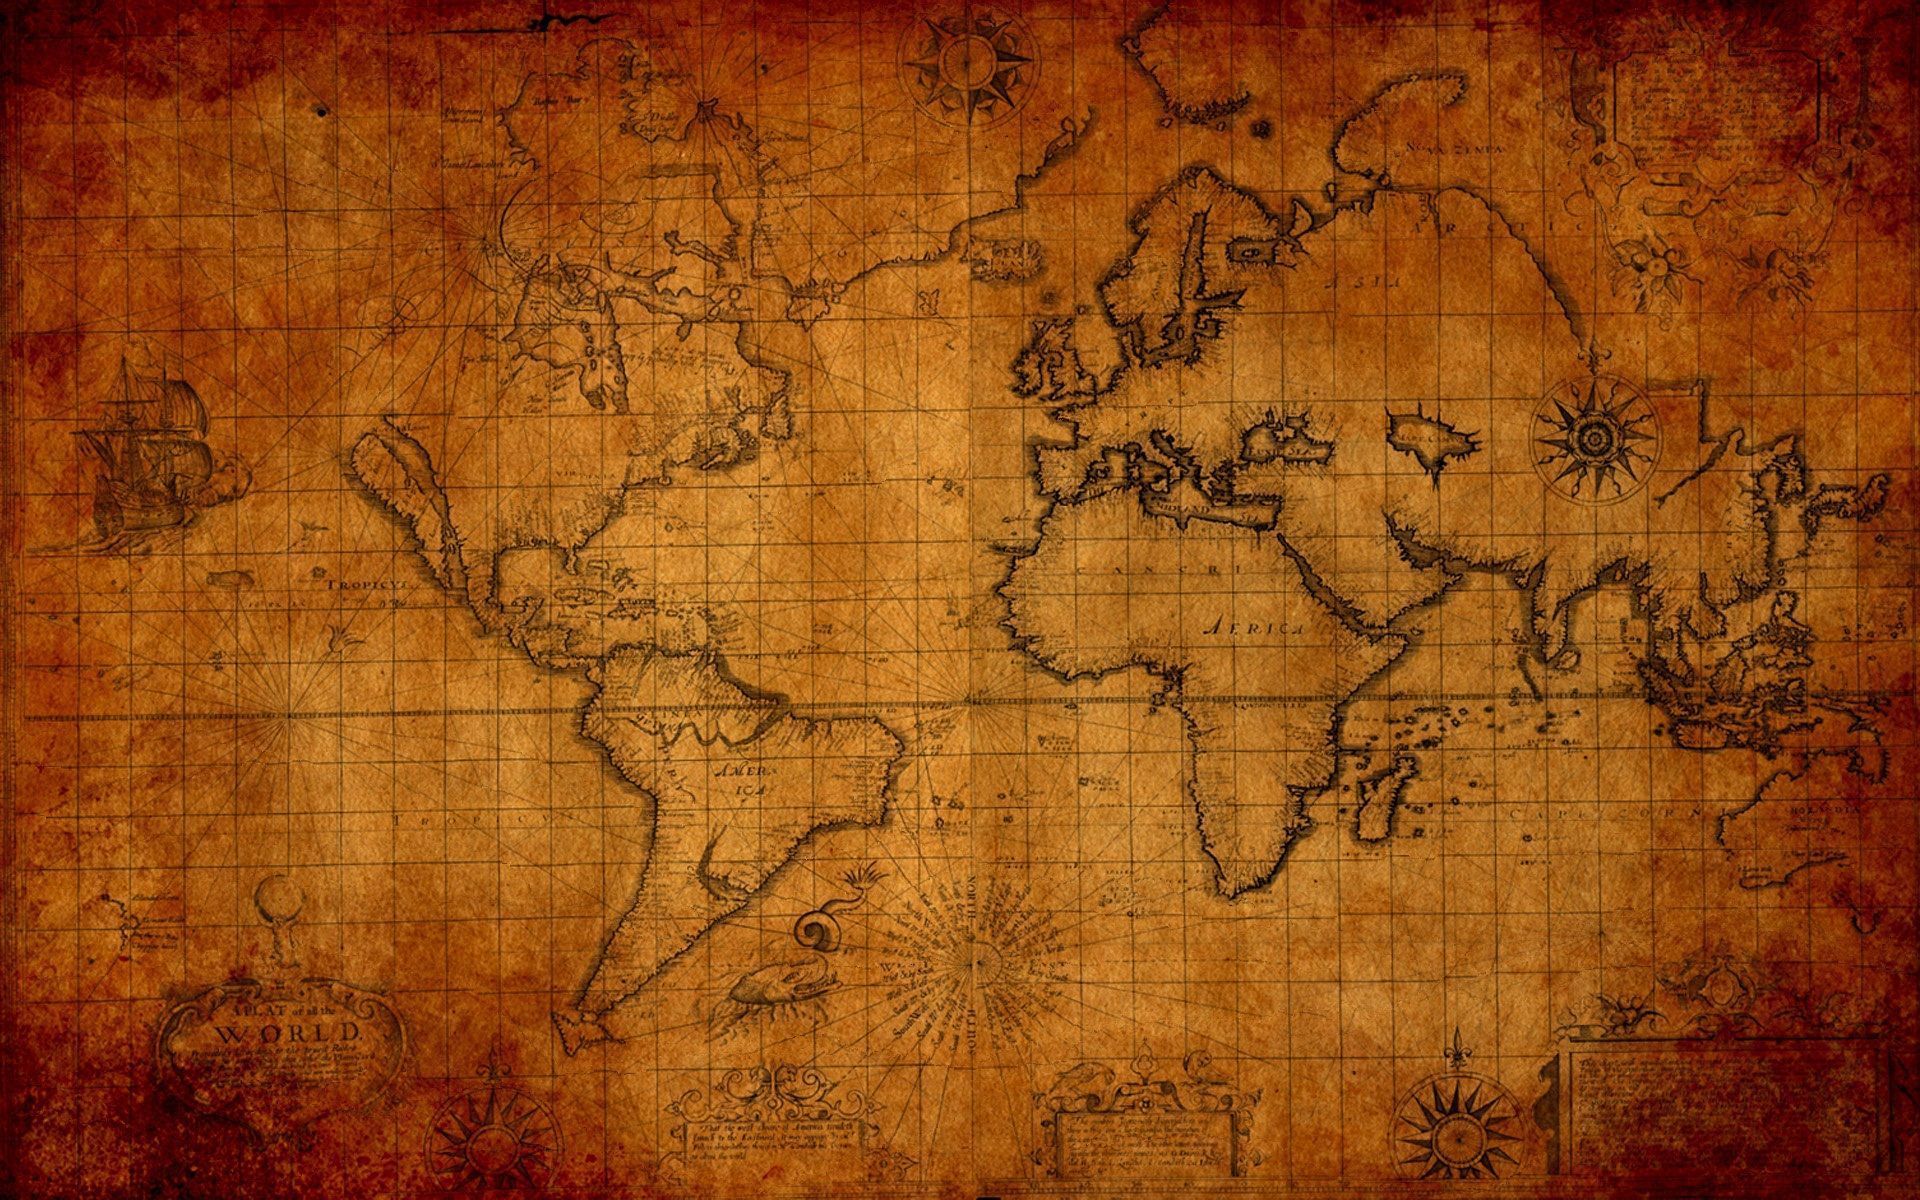 World Map Wallpaper HD wallpaper search. World map wallpaper, Antique world map, Old world maps